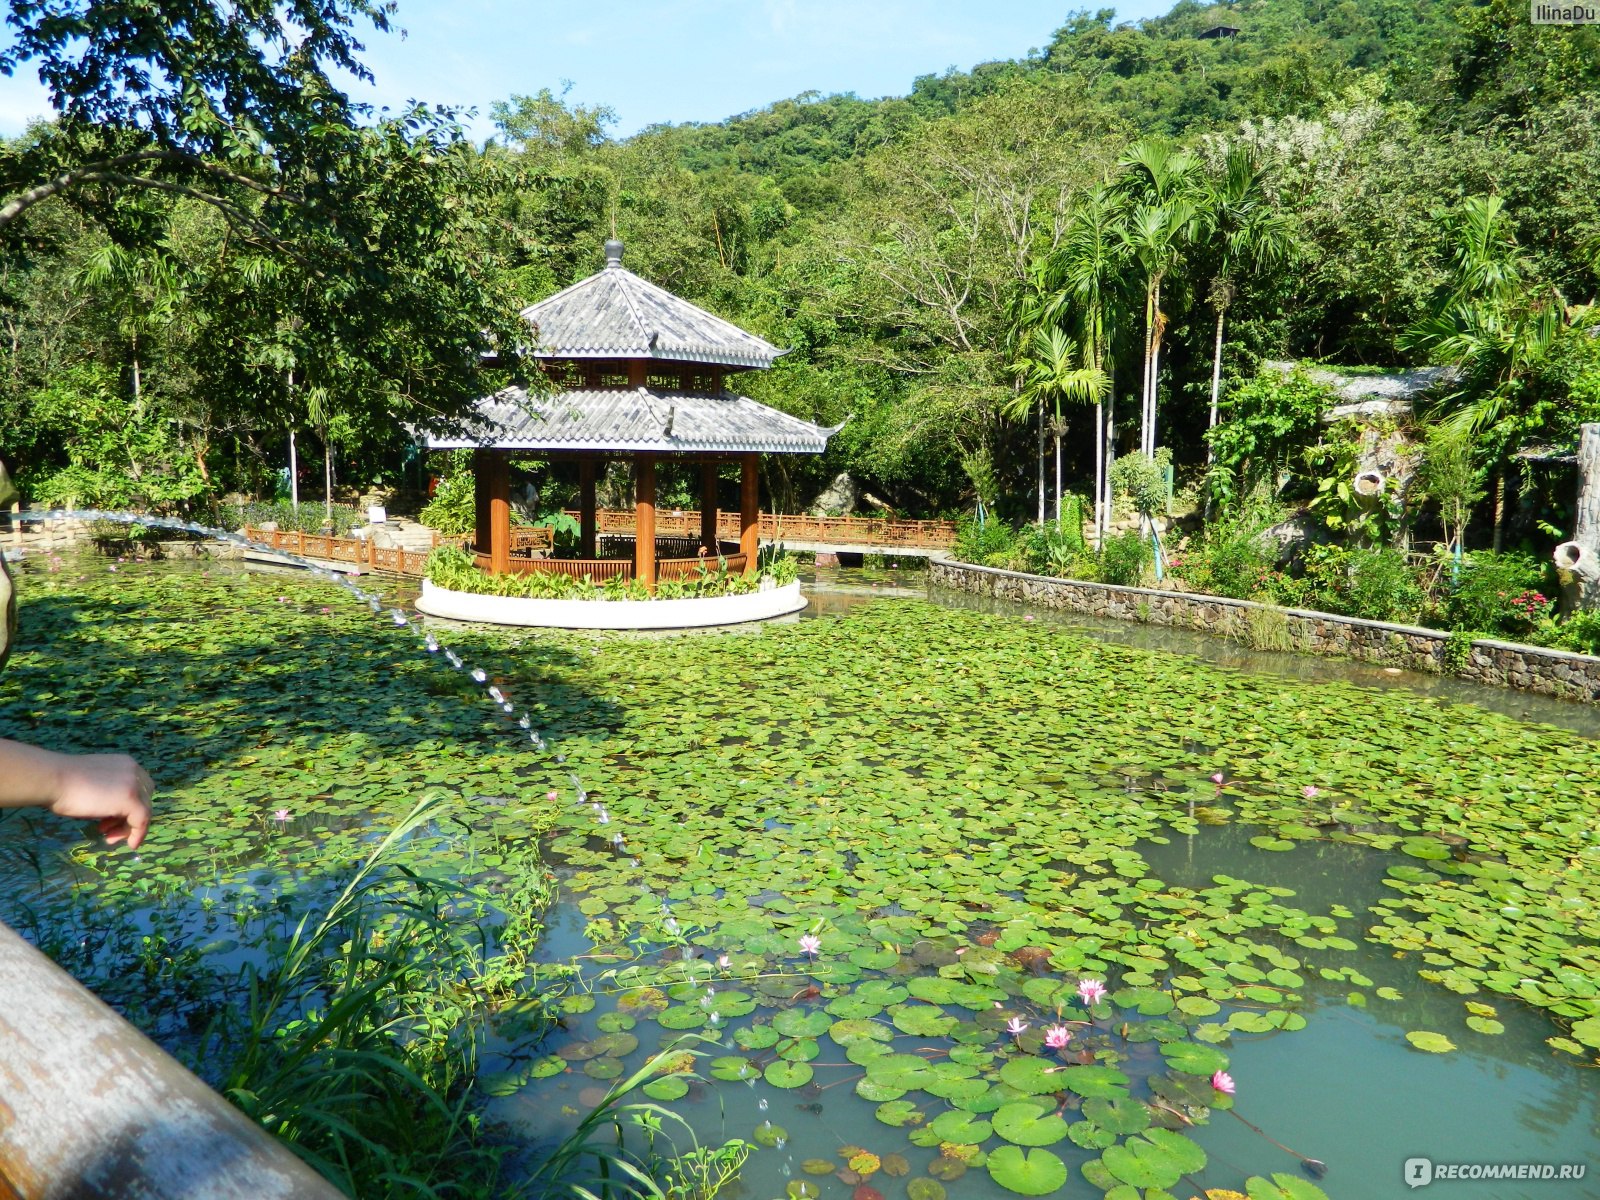 Парк " Тропический рай"- Ялунвань на о.Хайнане. 